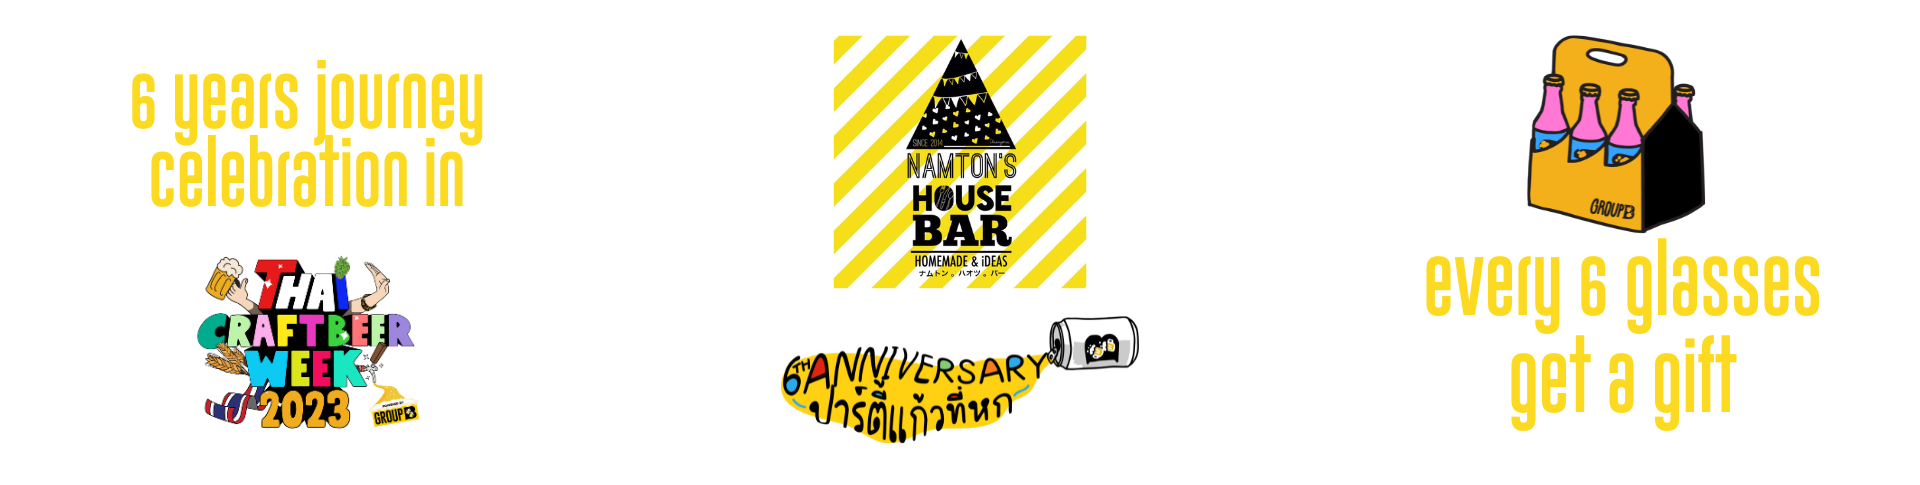 6th Anniversary ปาร์ตี้แก้วที่หก @ Namton’s